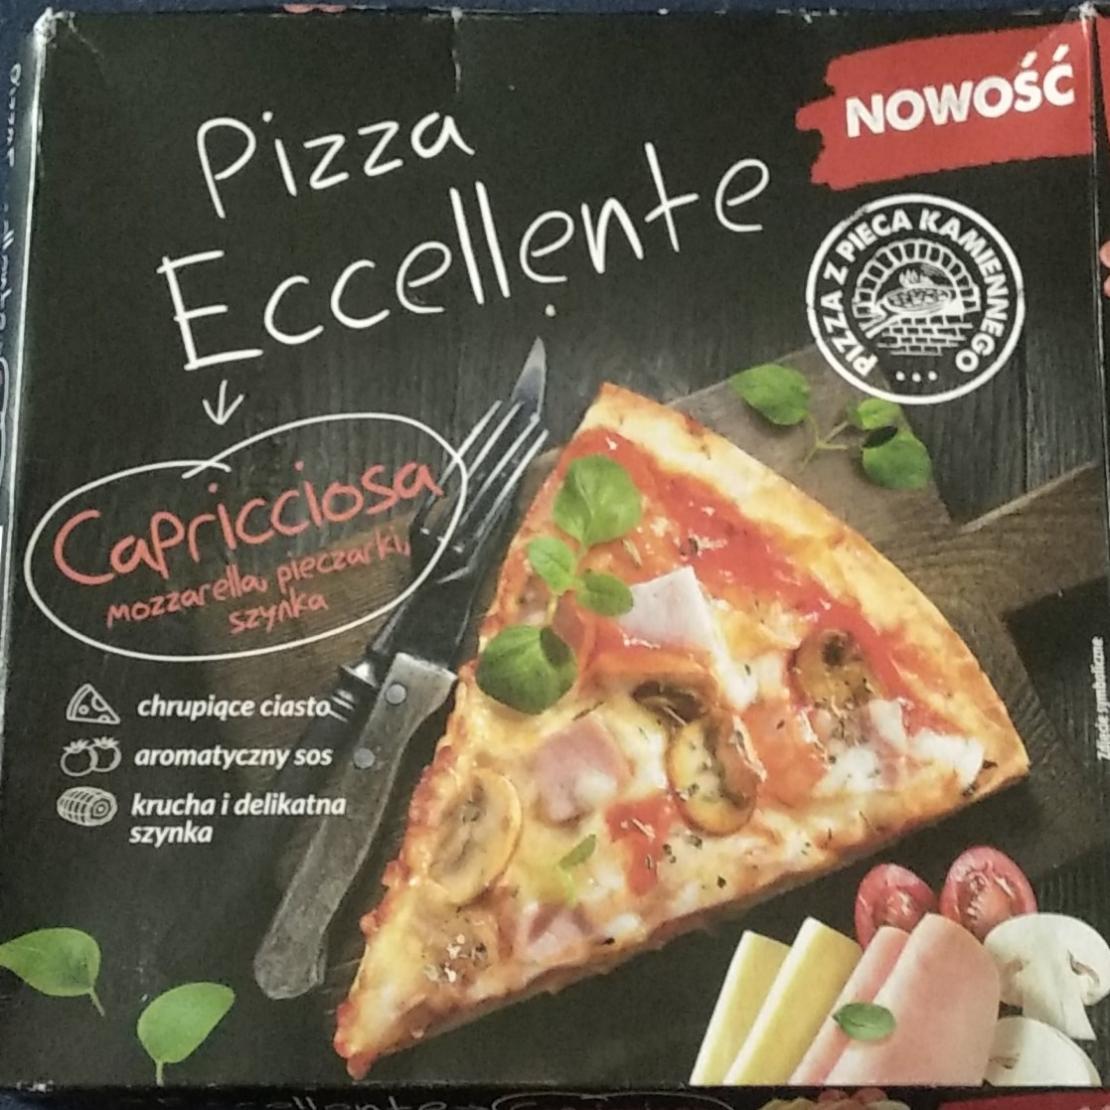 Фото - Піца Pizza Eccellente Capricciosa Nowość